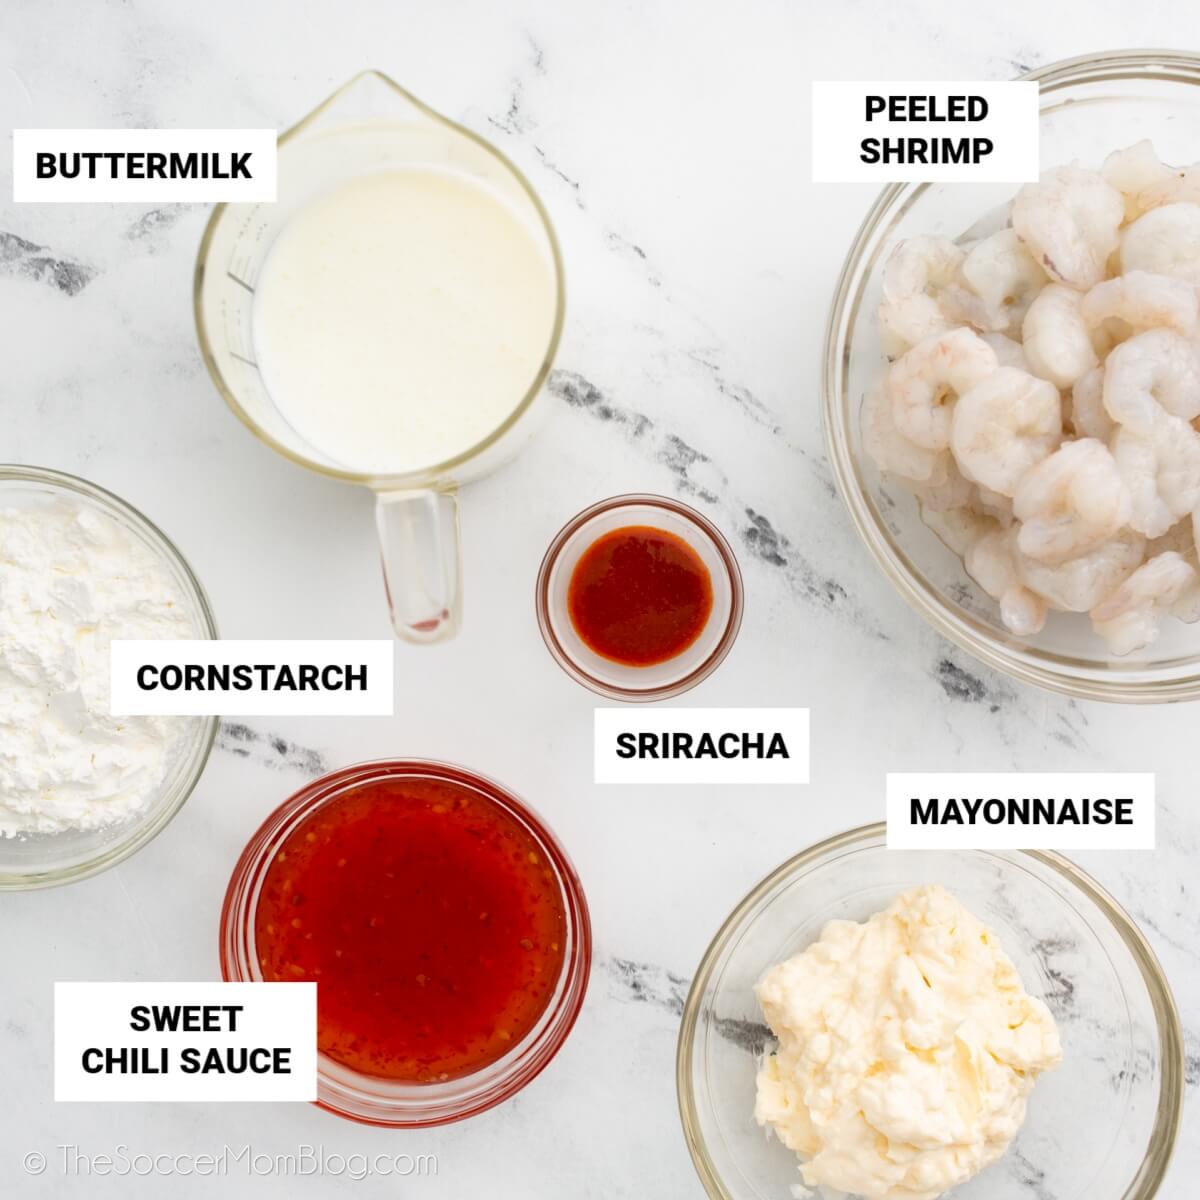 bang bang shrimp ingredients, with text labels